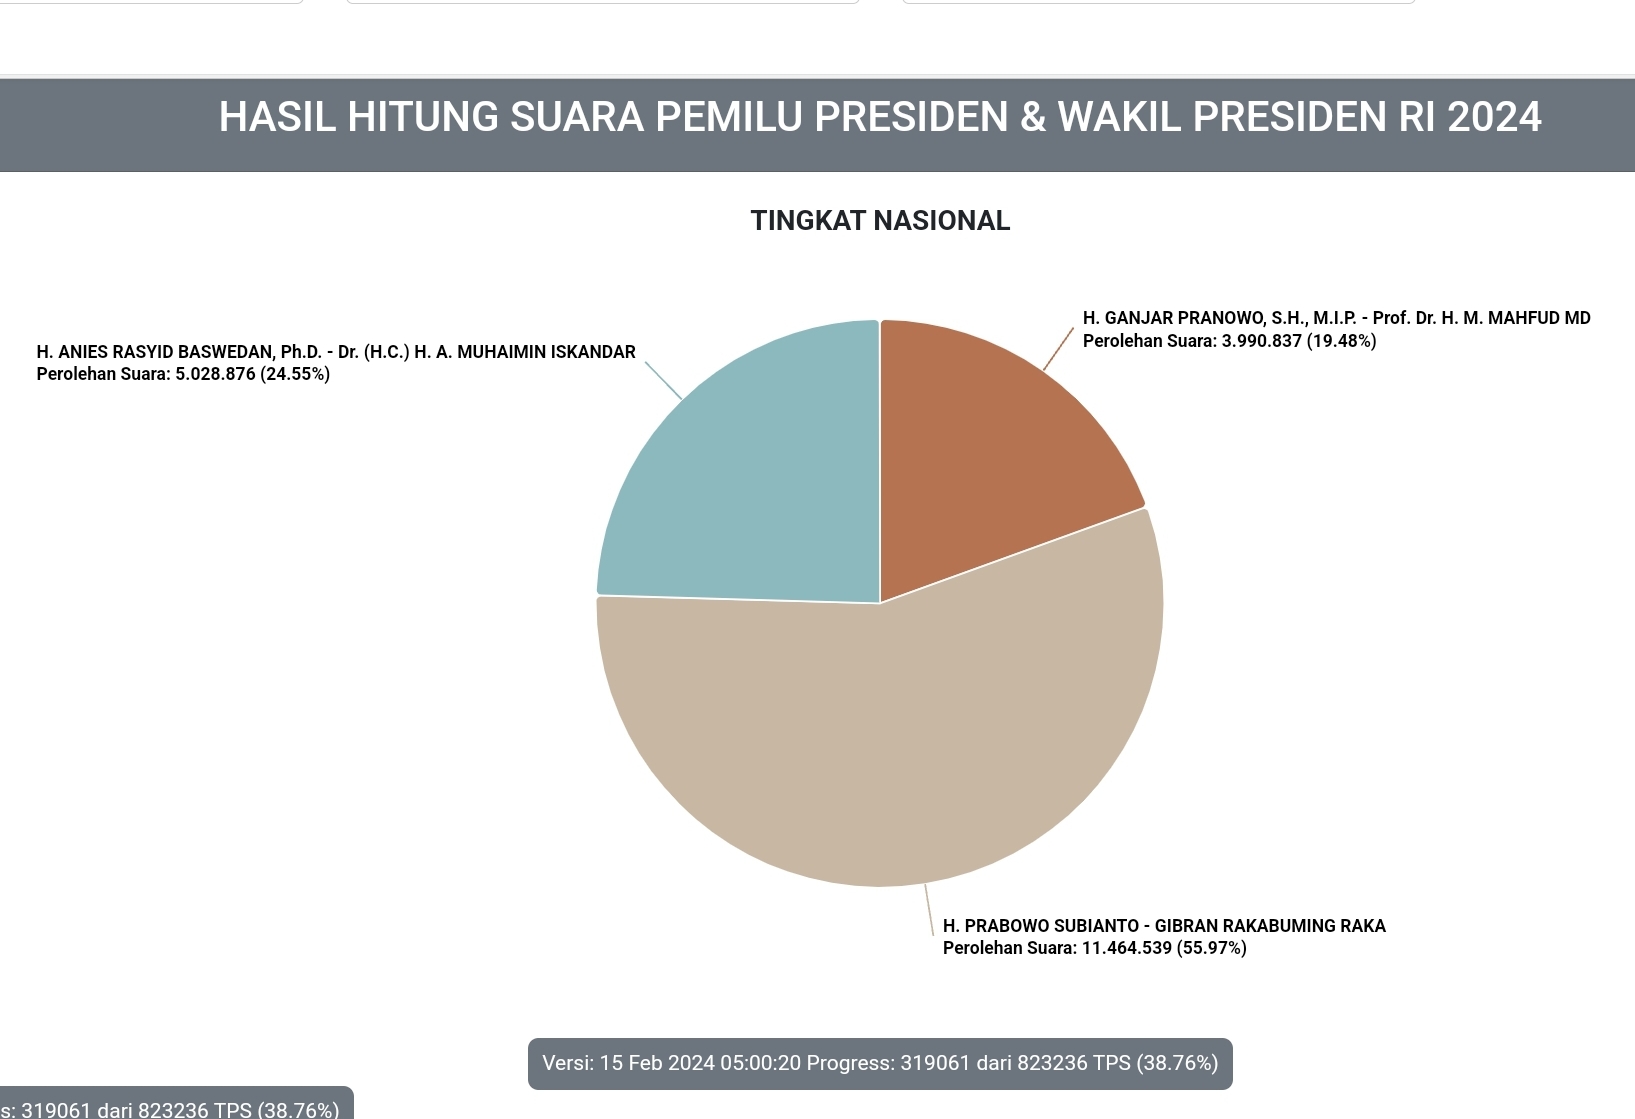 Hasil Sementara Real Count KPU: Anies 24,55, Prabowo 55,97 Persen, Ganjar 19,48 Persen